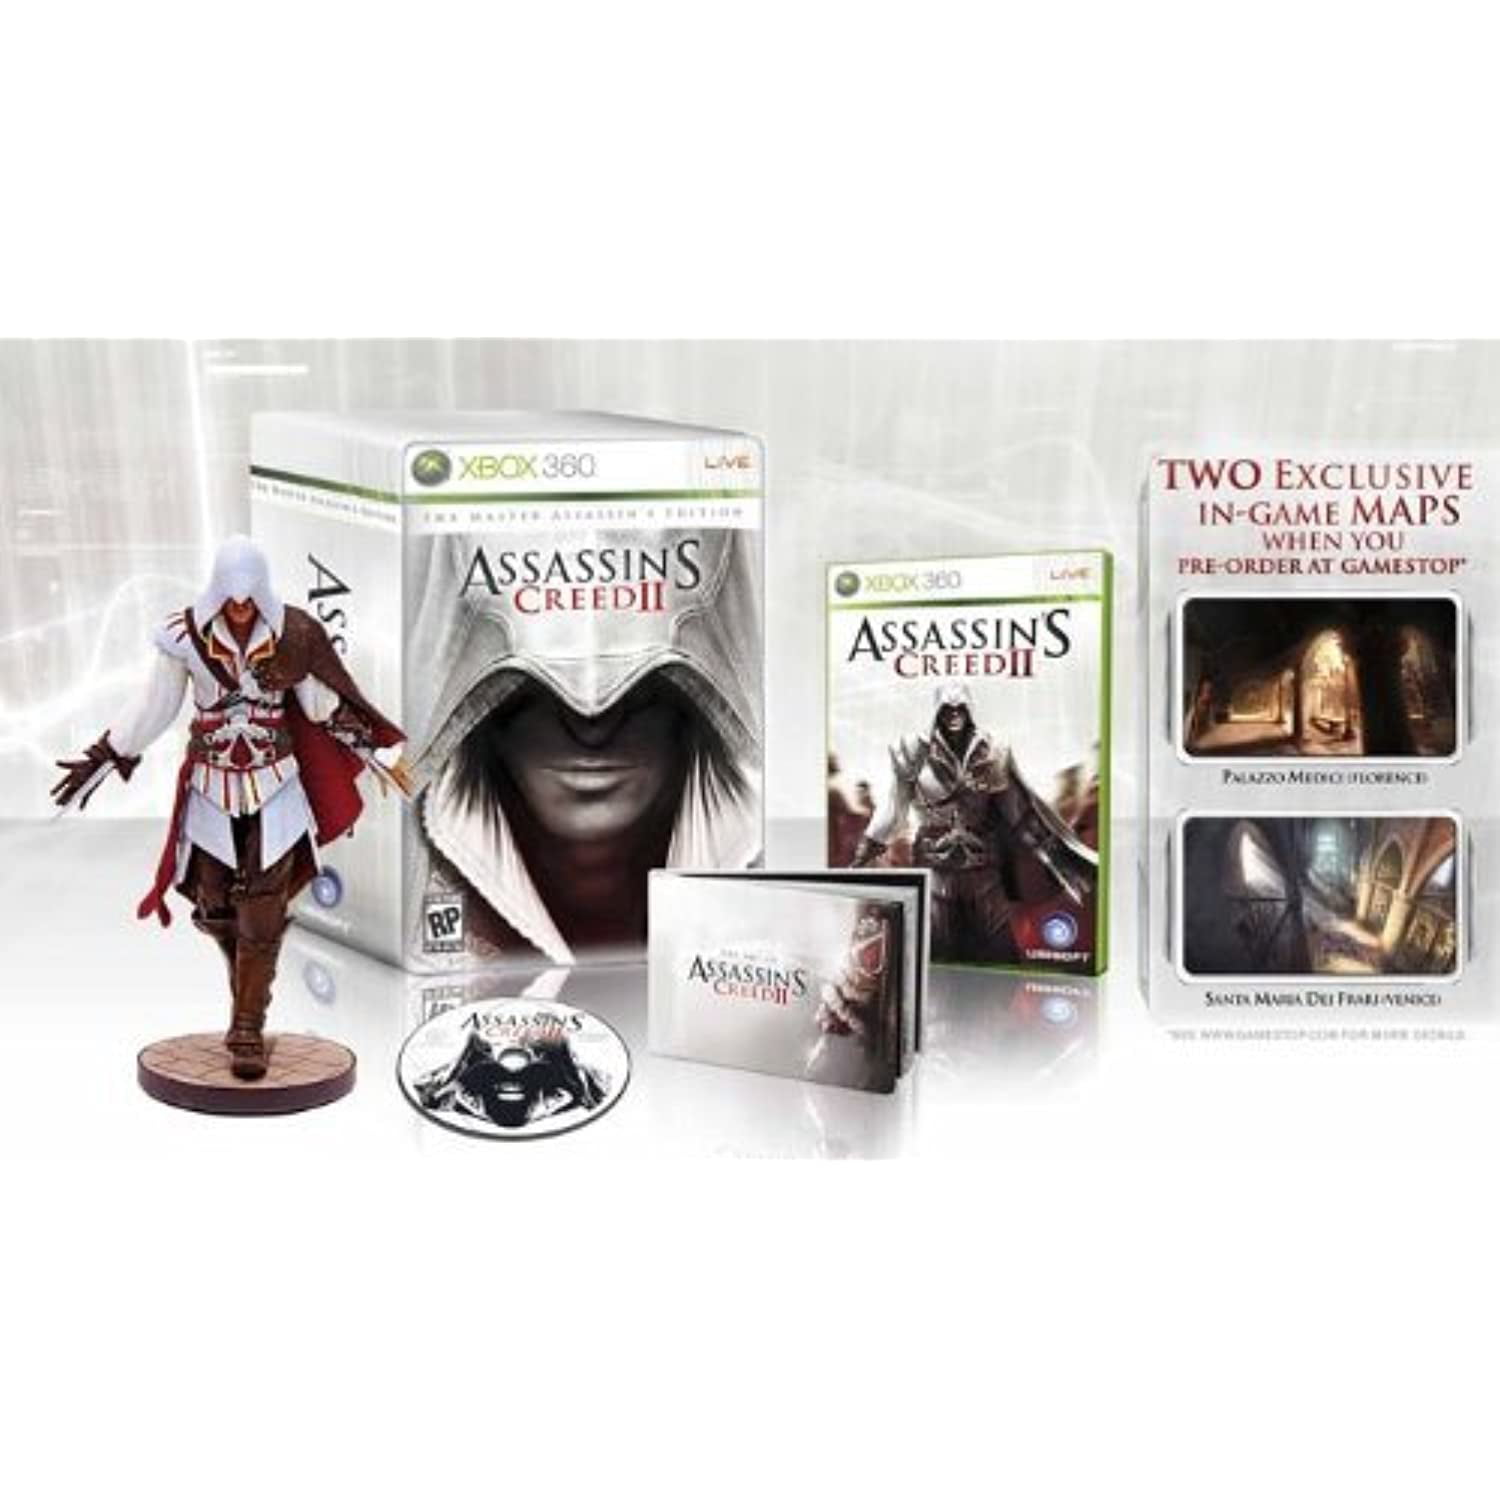 Книга мастер ассасин. Ассасин Крид 2 иксбокс 360. Assassin's Creed 2 Master Assassins Edition ps3. Ассасин Крид 2 диск плойка 3. Assassins Creed 2 коллекционное издание.